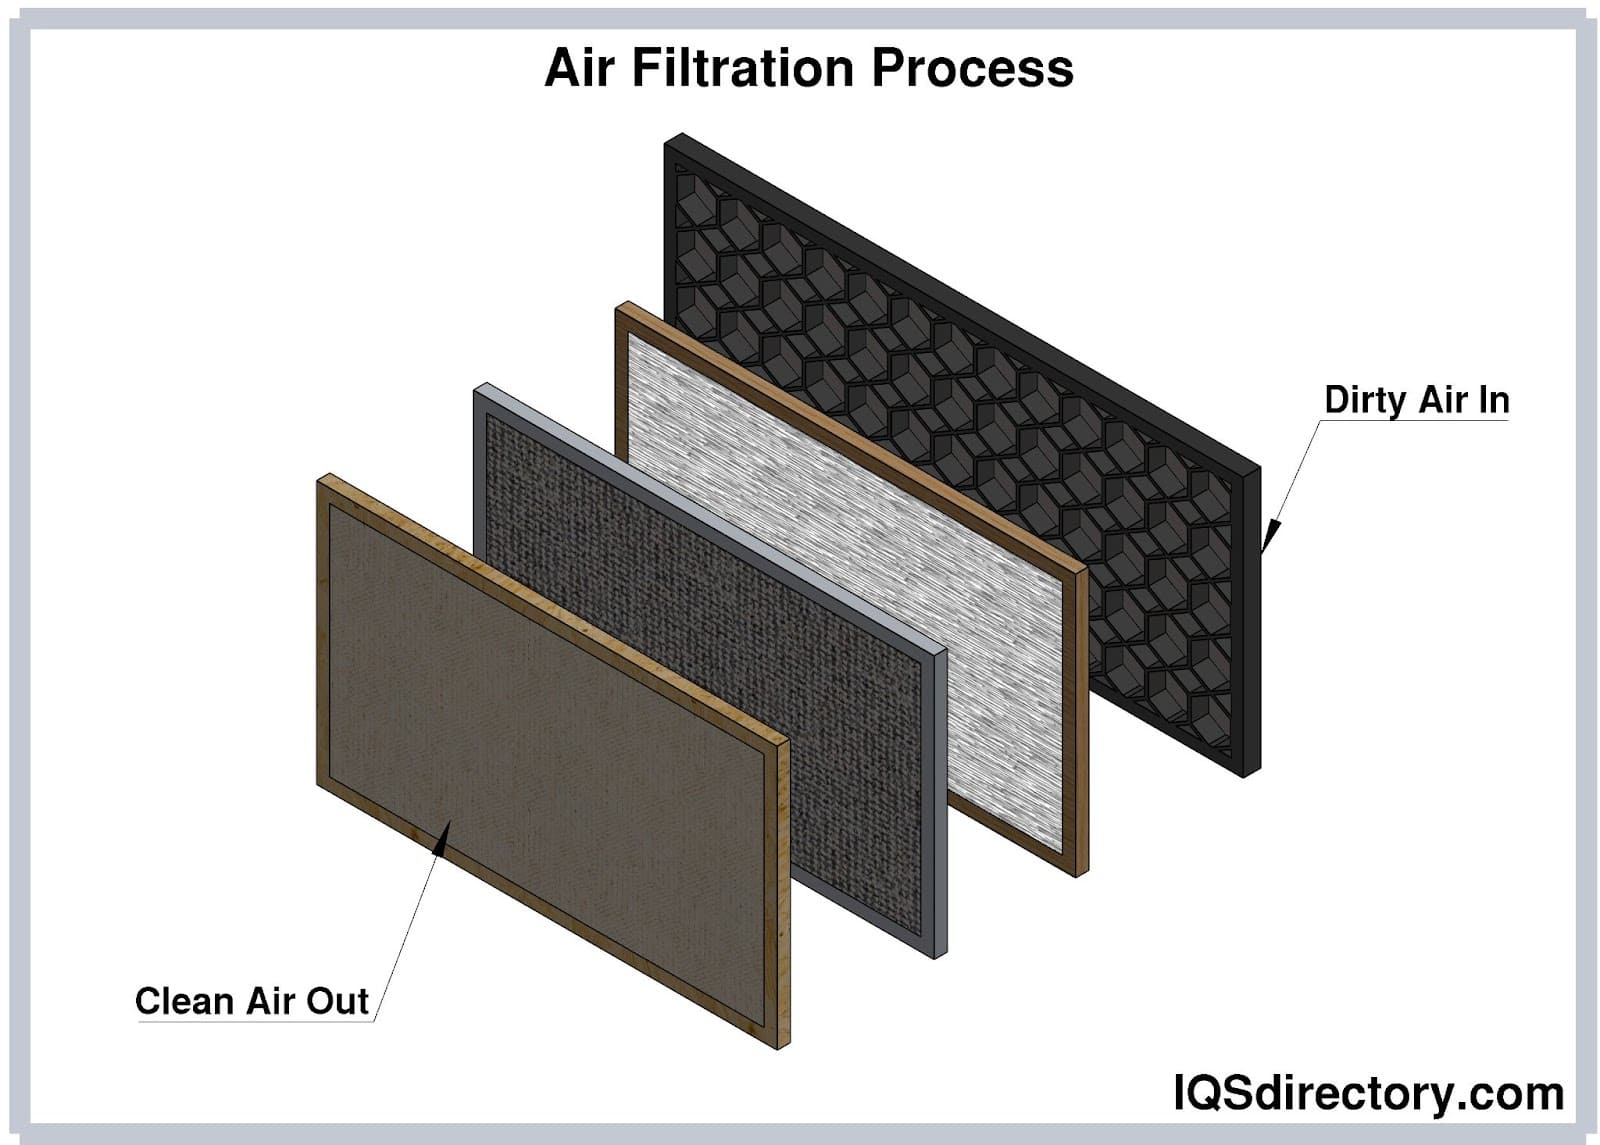 Air Filtration Process